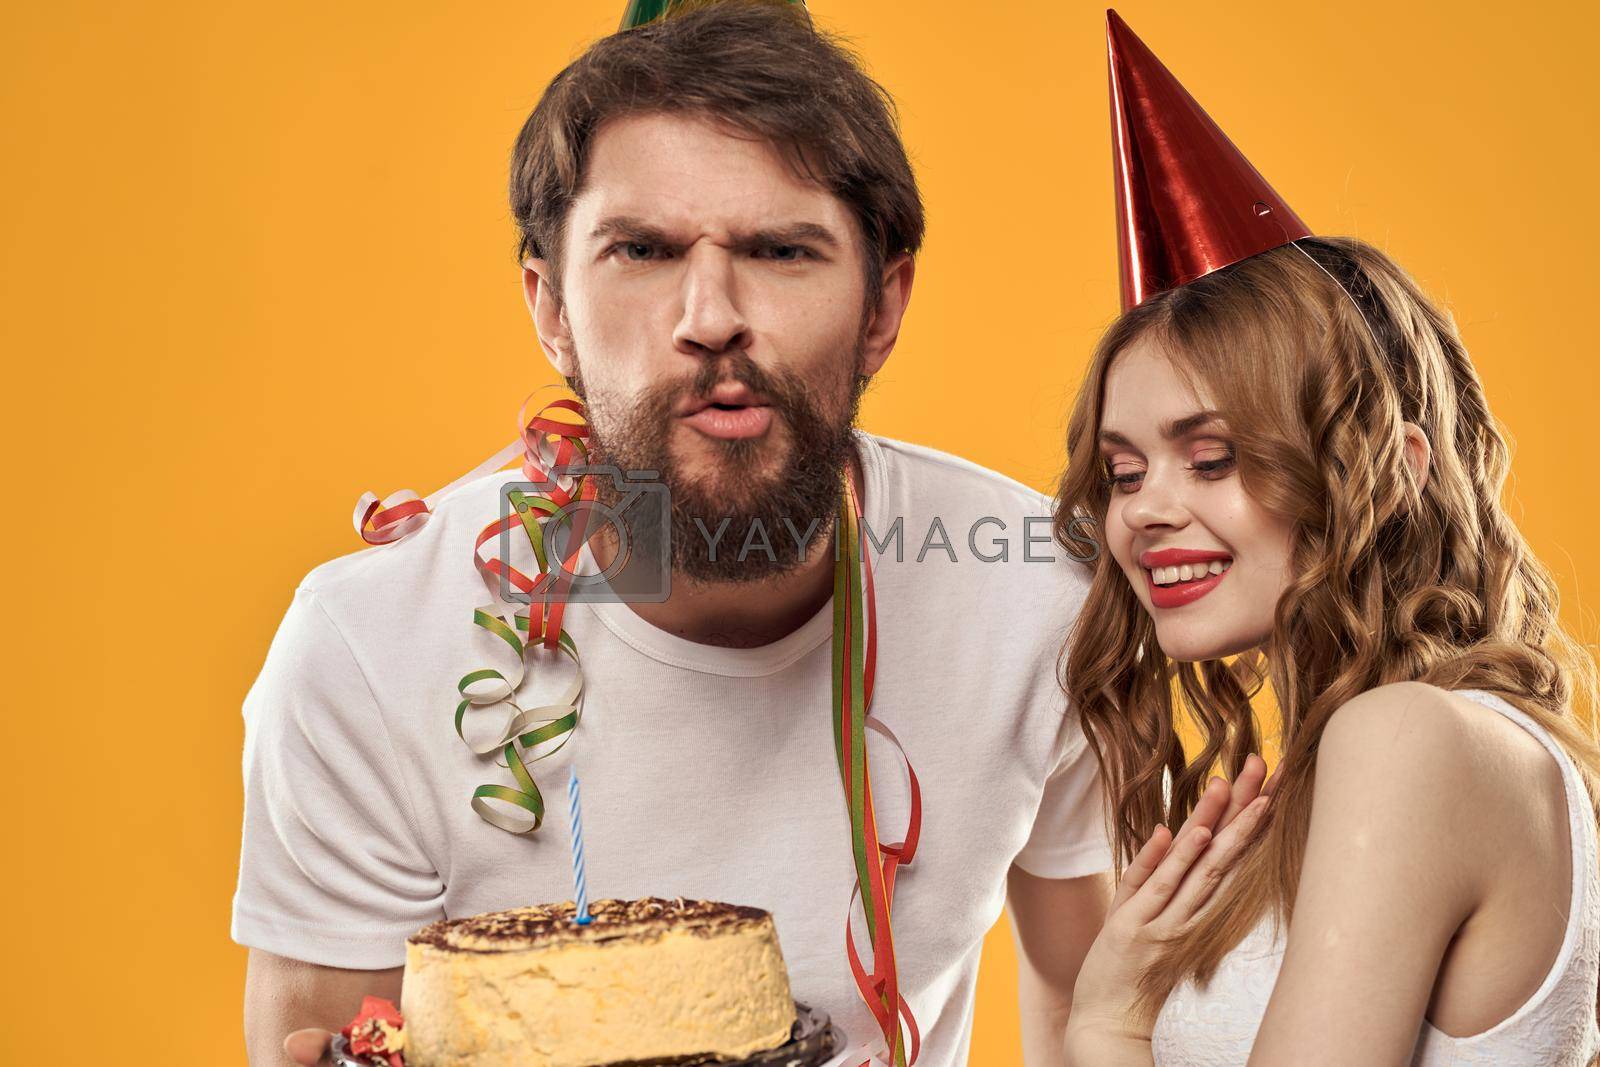 Man and woman celebration fun birthday cake. High quality photo